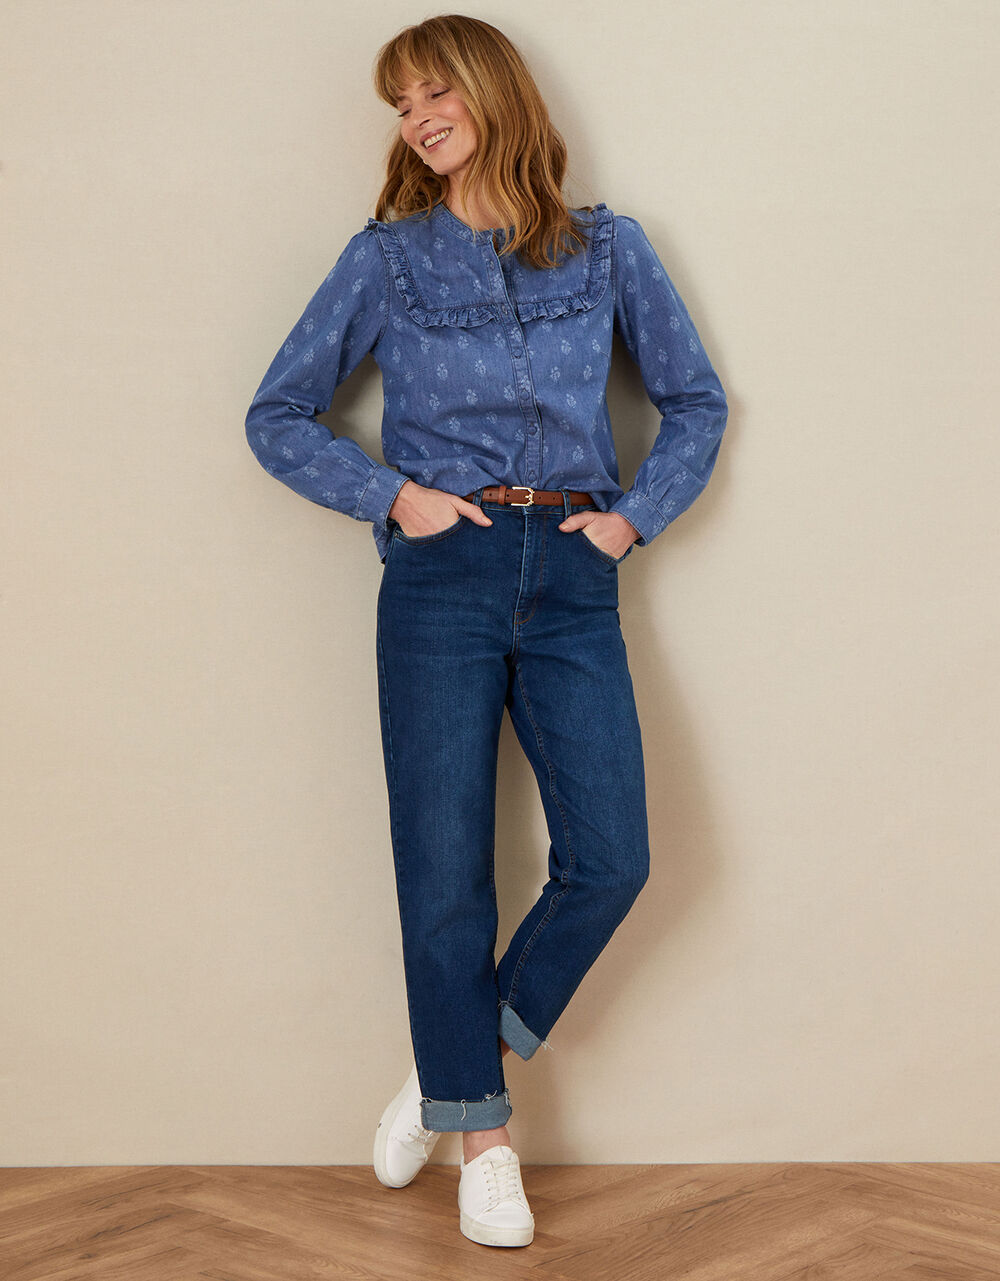 Women Women's Clothing | Laser Print Denim Shirt in Sustainable Cotton Blue - WP83746